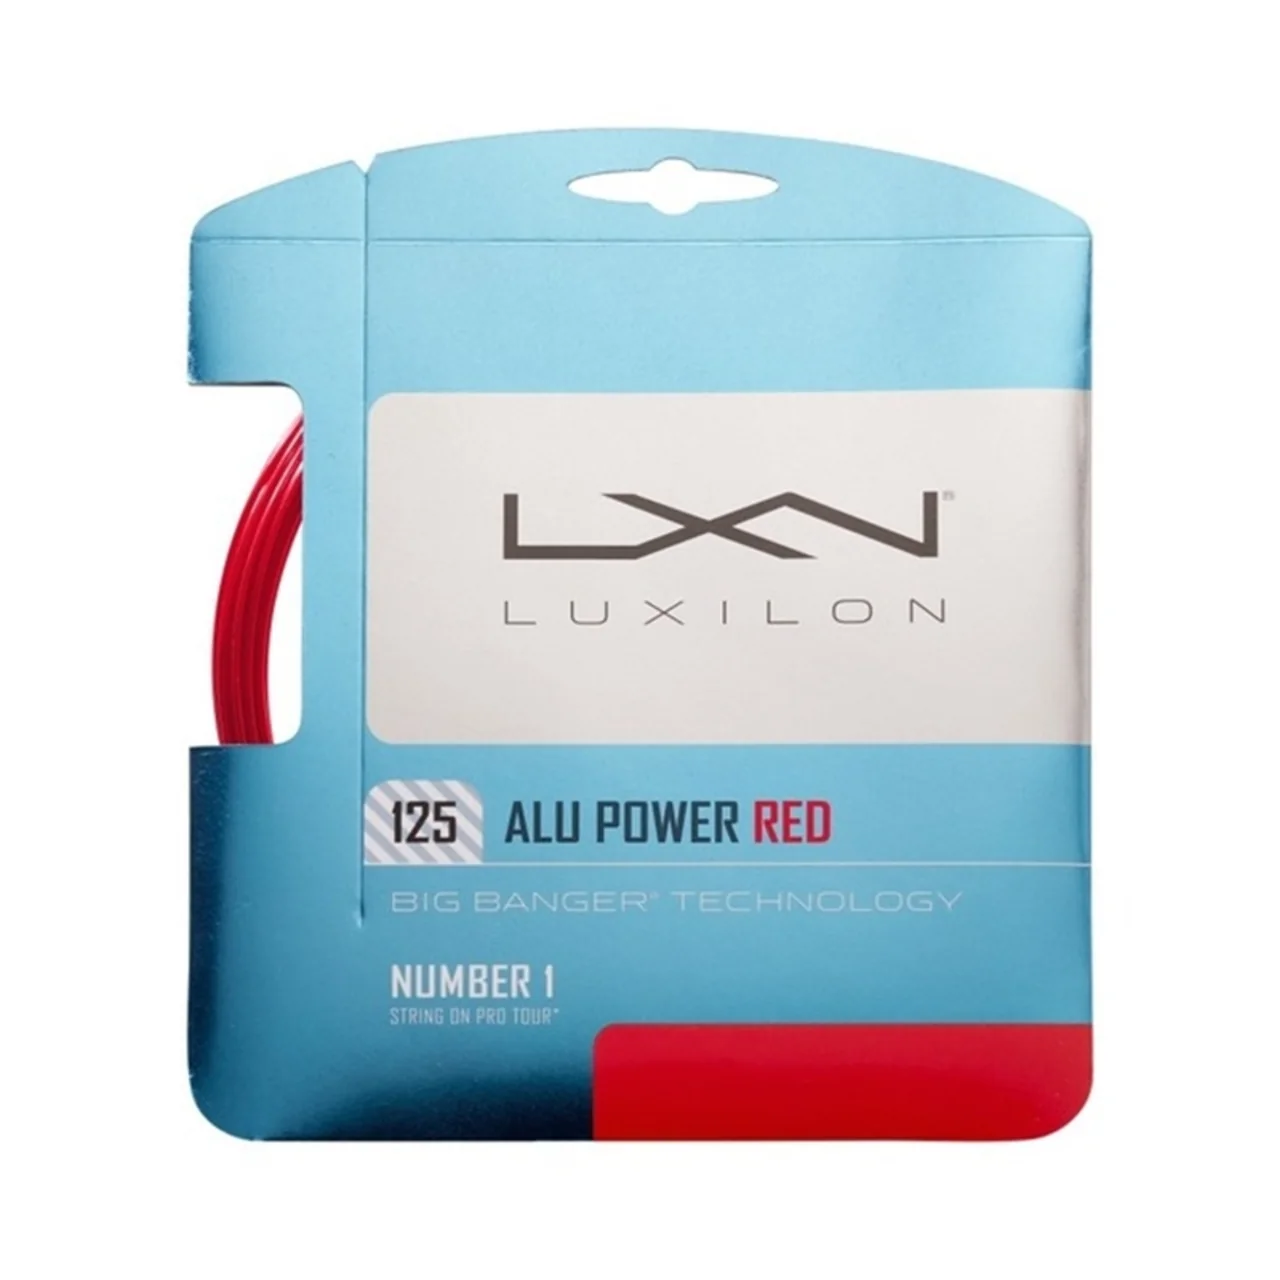 Luxilon Big Banger Alu Power Set LTD Red